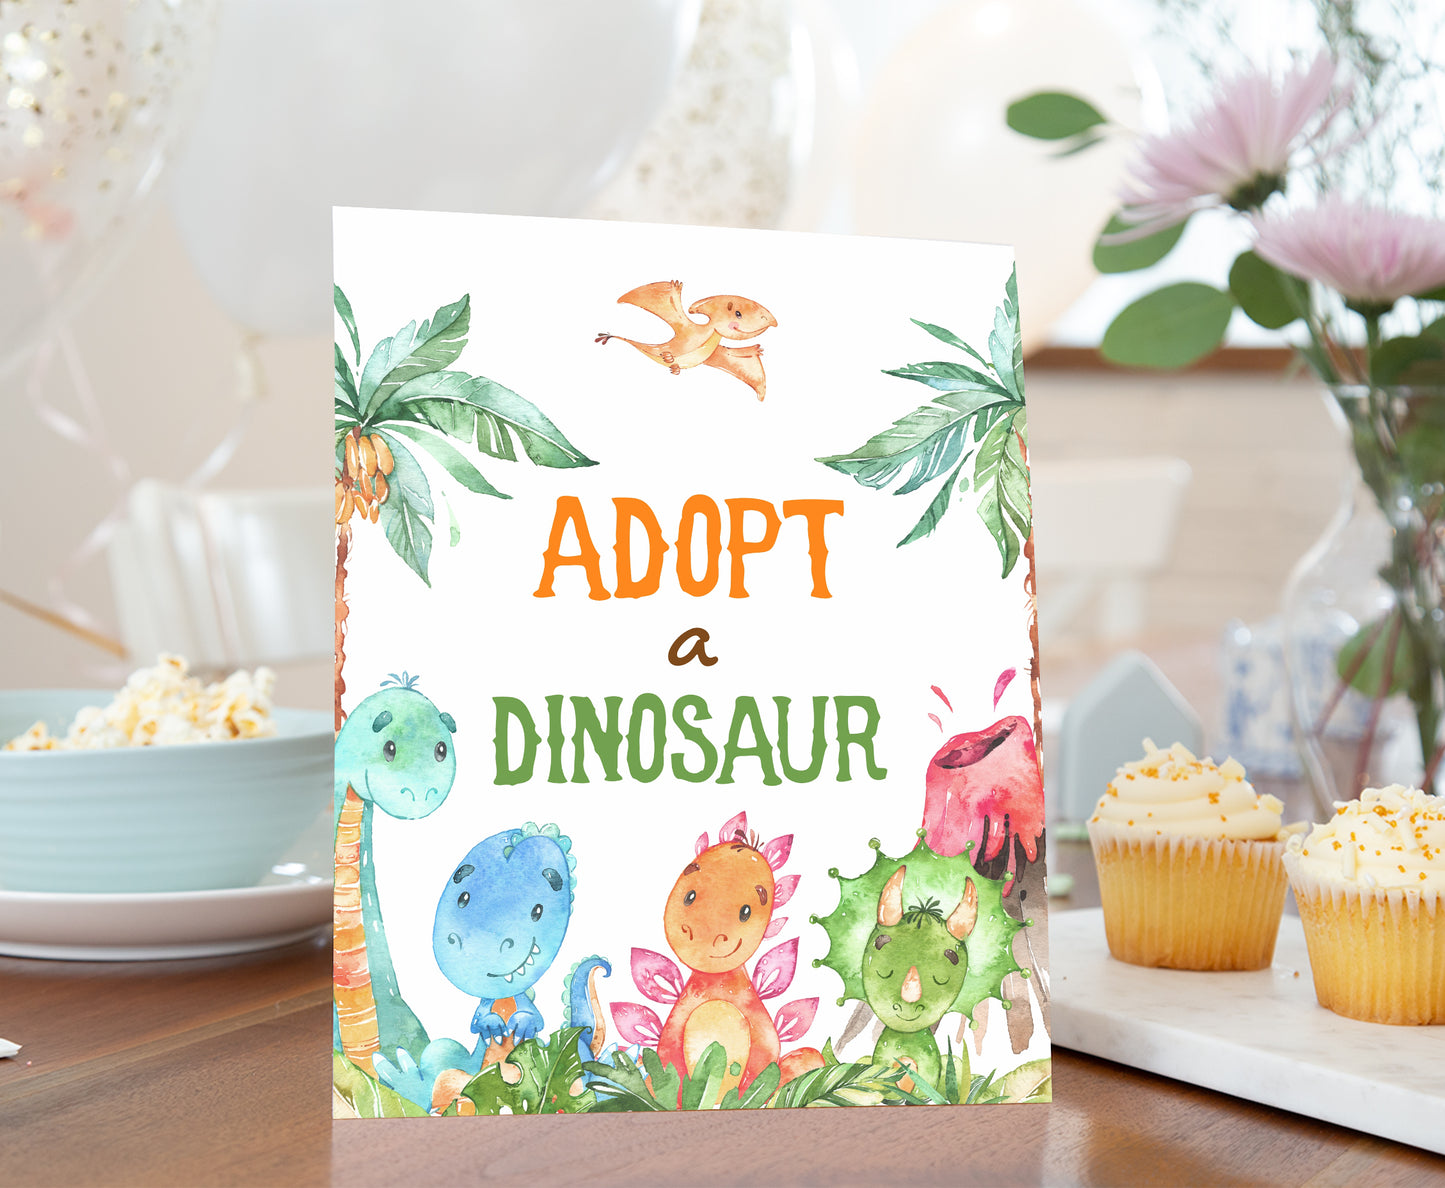 Adopt a Dinosaur table Sign | Dinosaur Themed Party Table Decorations - 08A